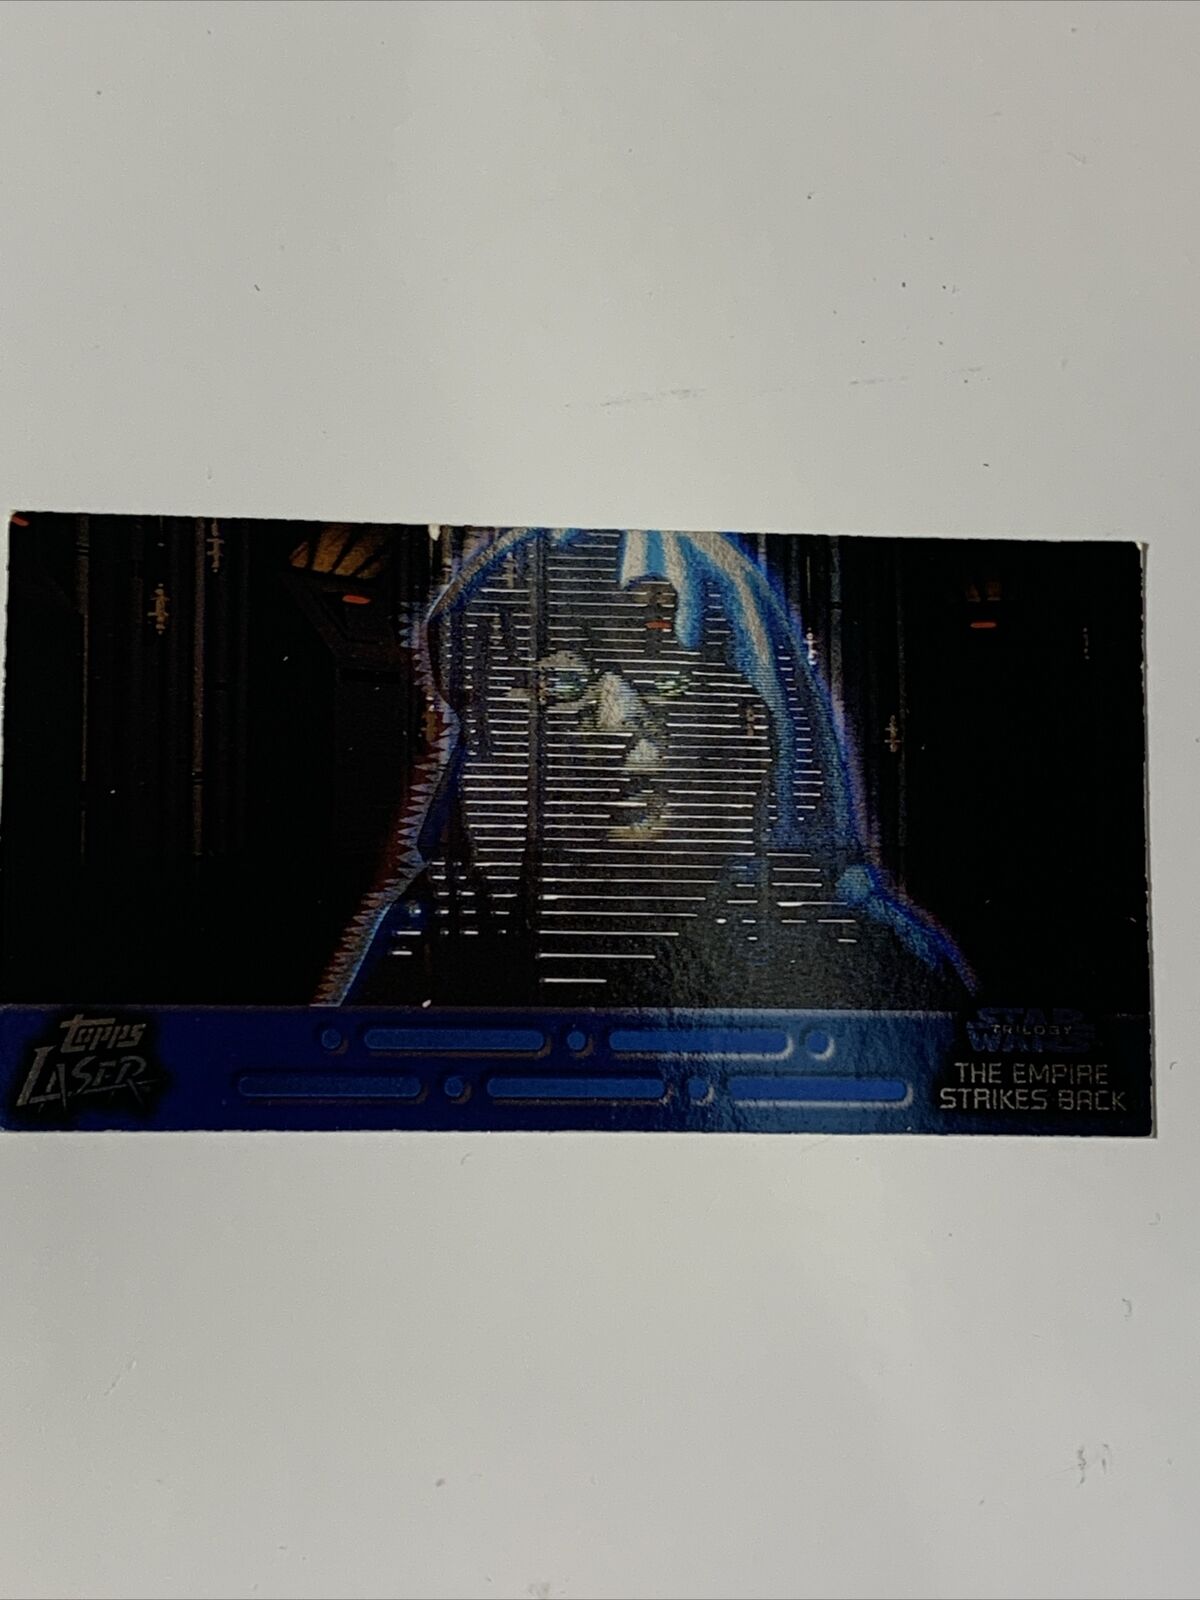 Topps Lazer Star Wars Trilogy The Empire Strikes Back Hologram of Emperor